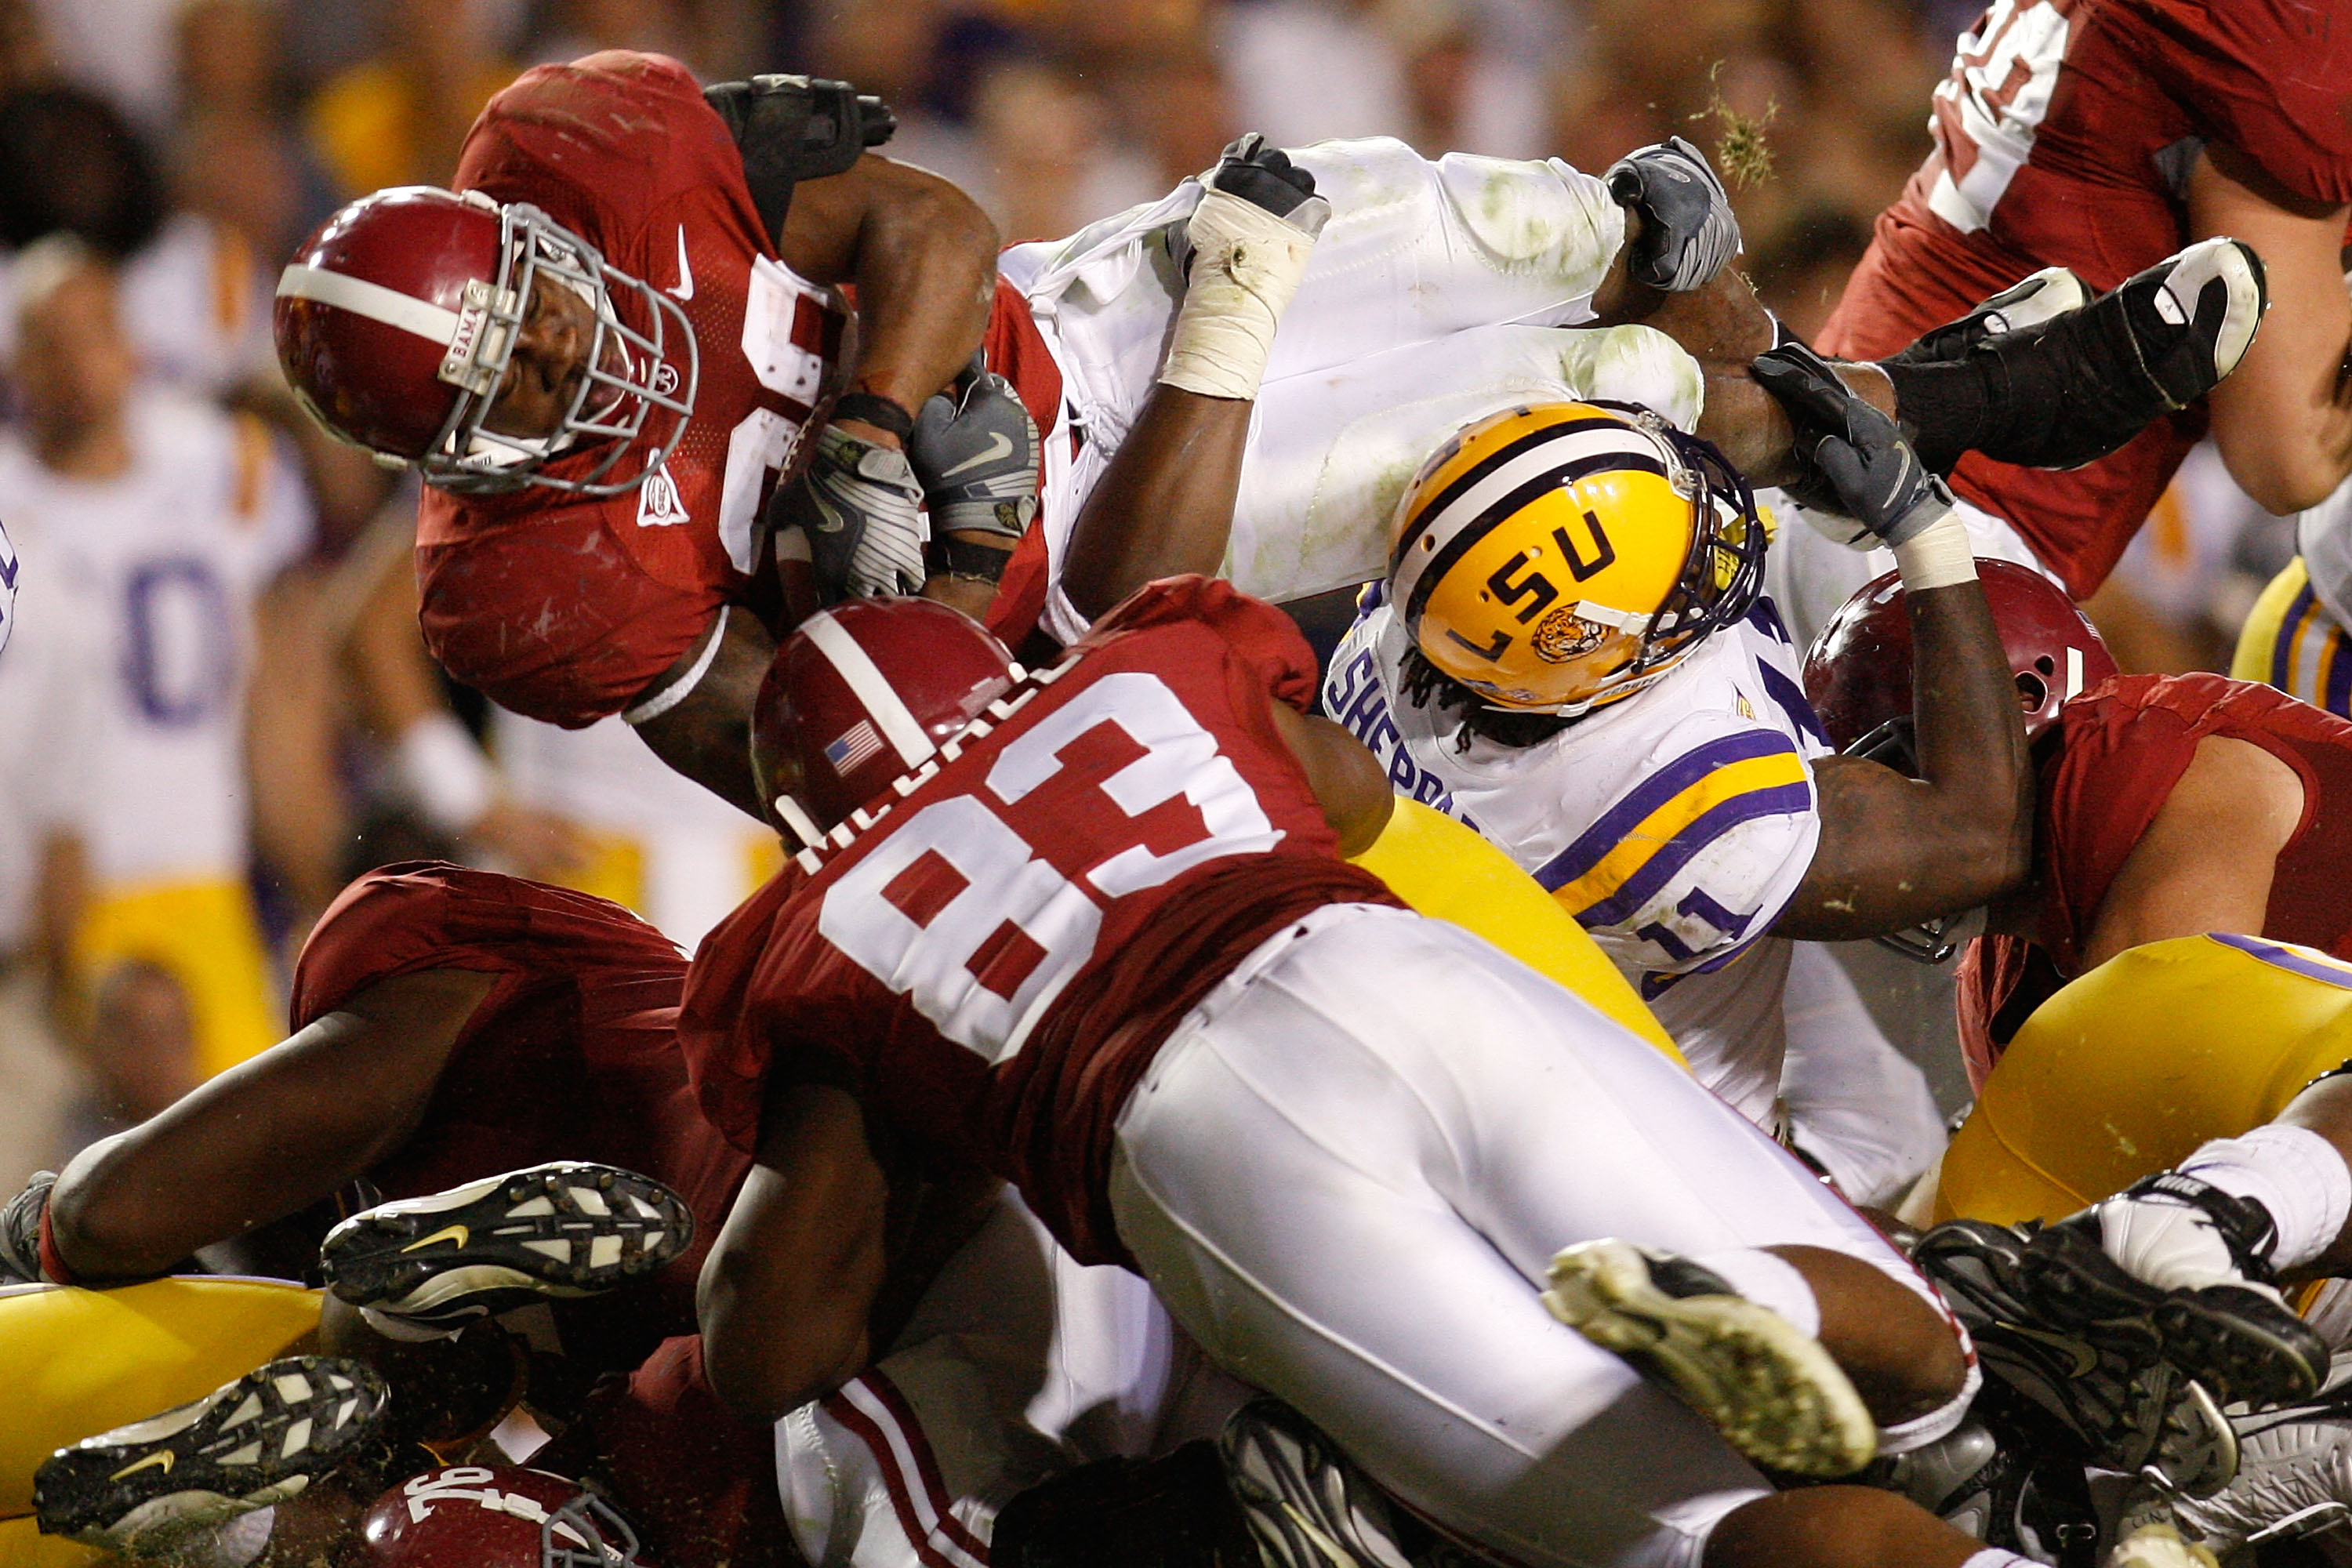 2011 LSU vs. Alabama football game - Wikipedia